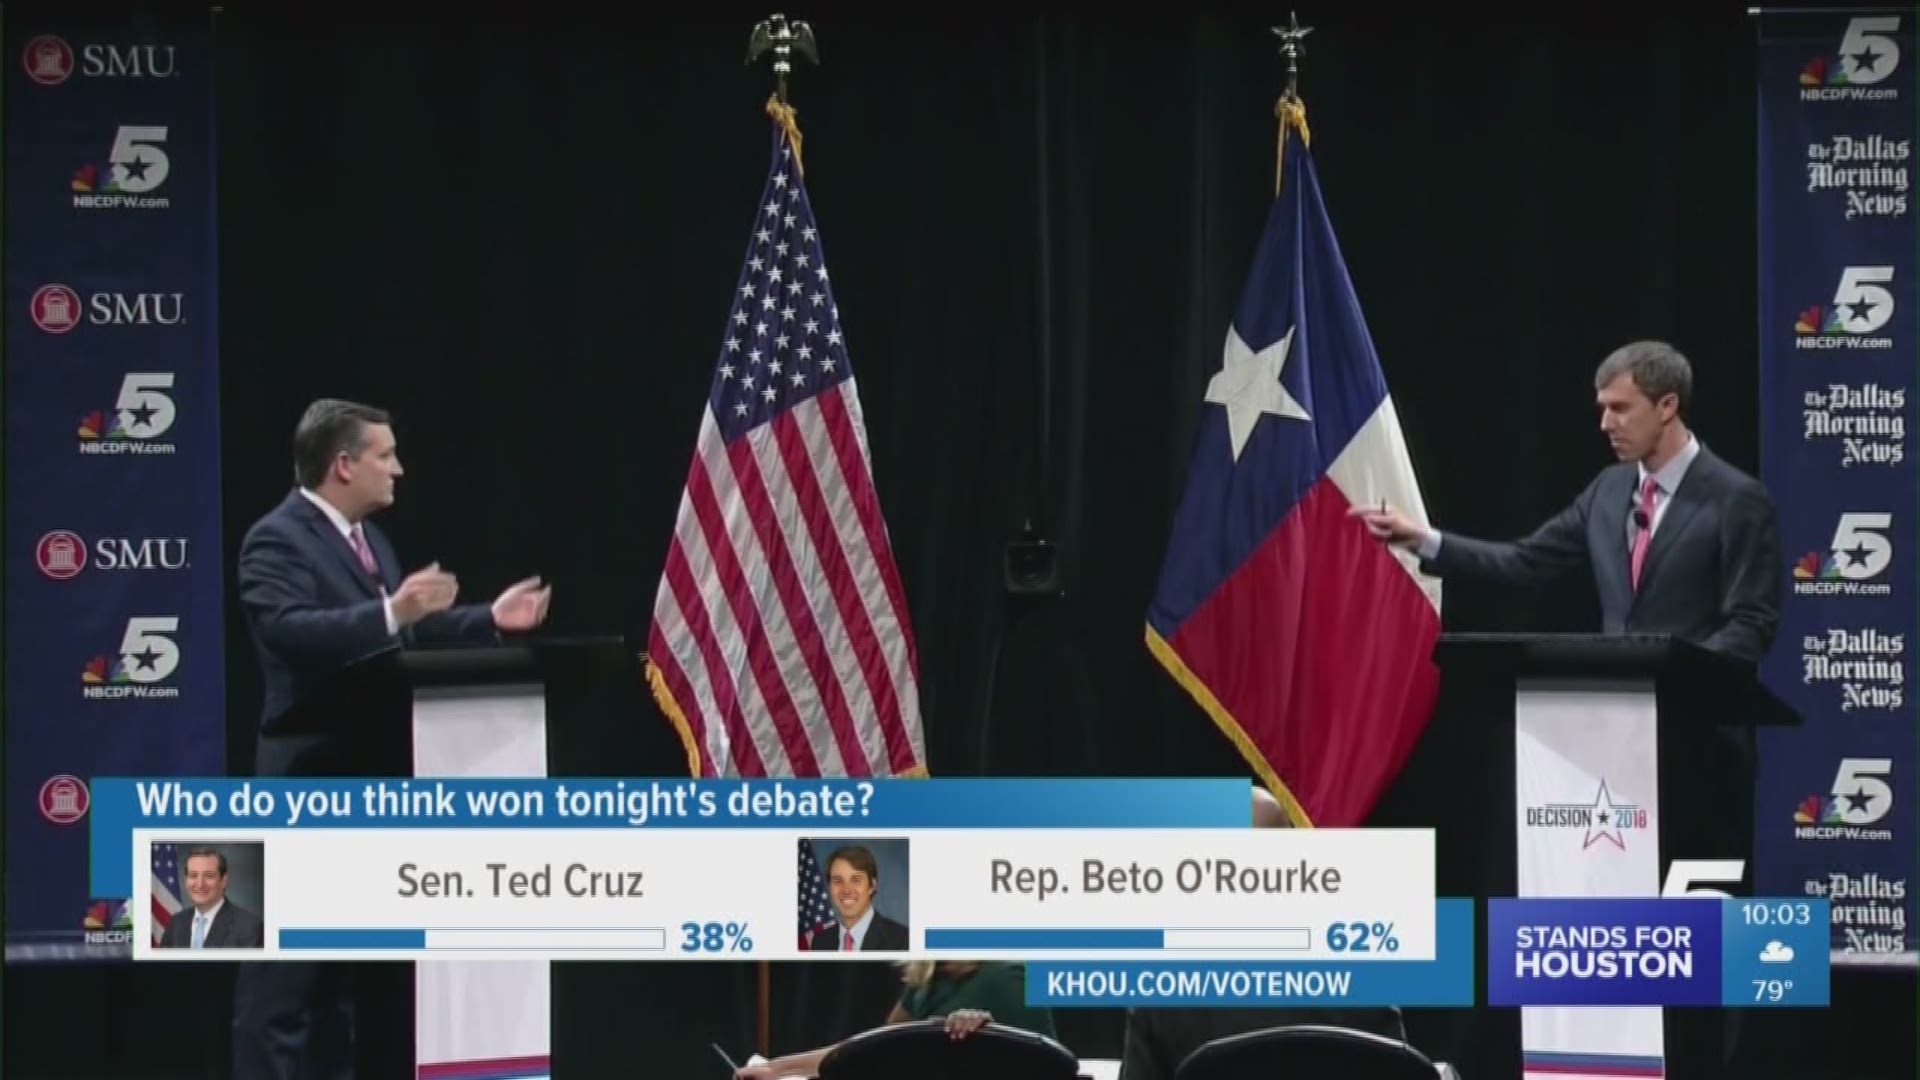 Sen. Ted Cruz and Congressman Beto O'Rourke debated in Dallas Friday night.